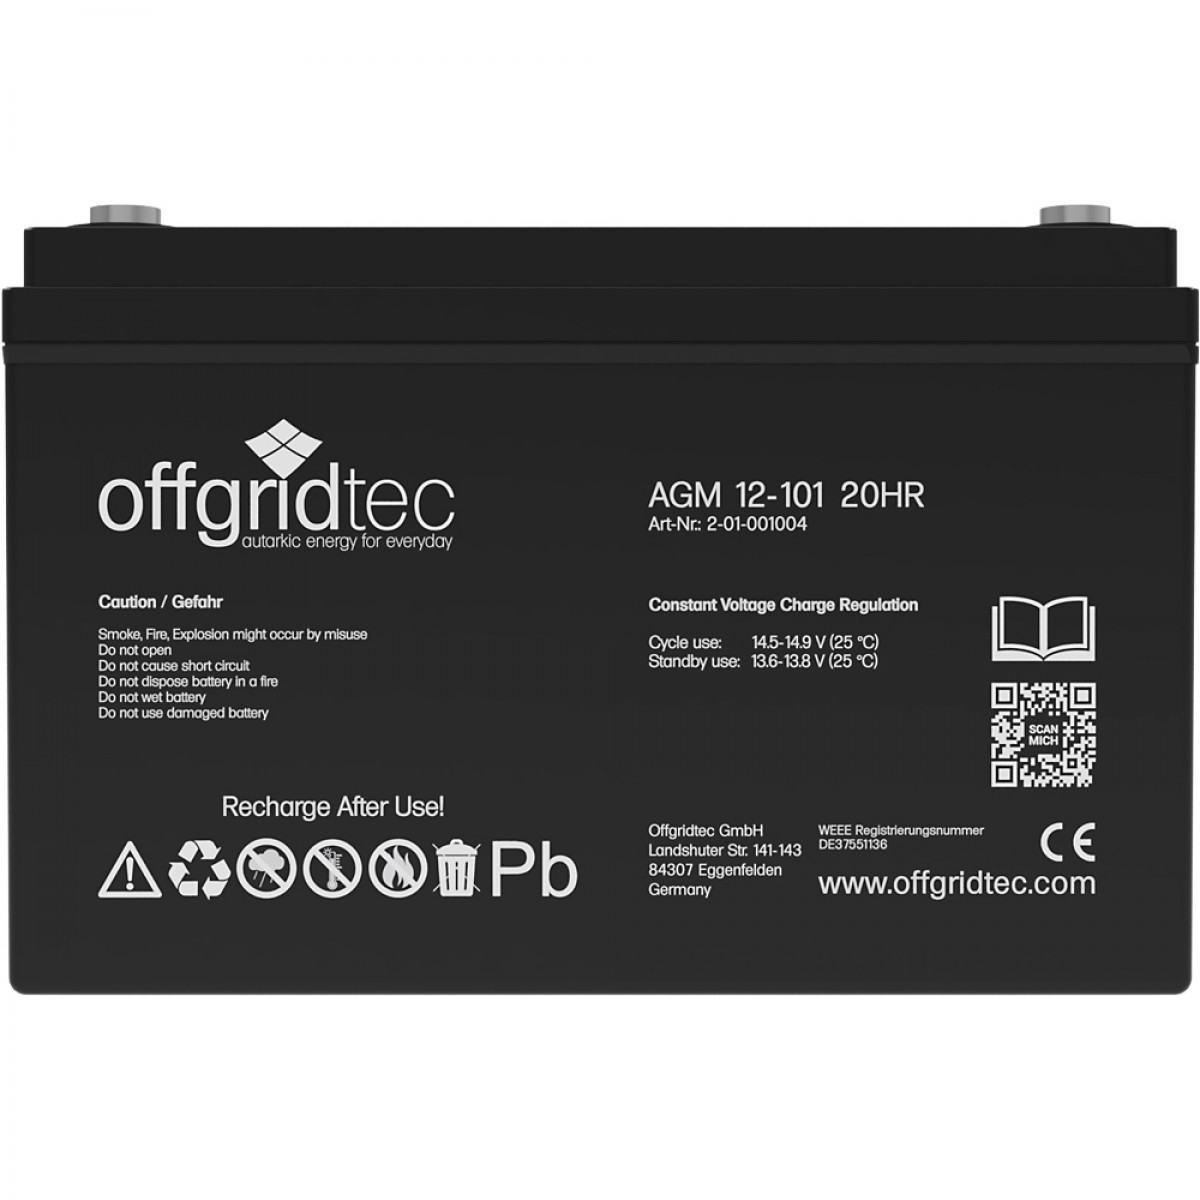 12 Volt 100ah Batterie In Agm Qualitat Von Offgridtec